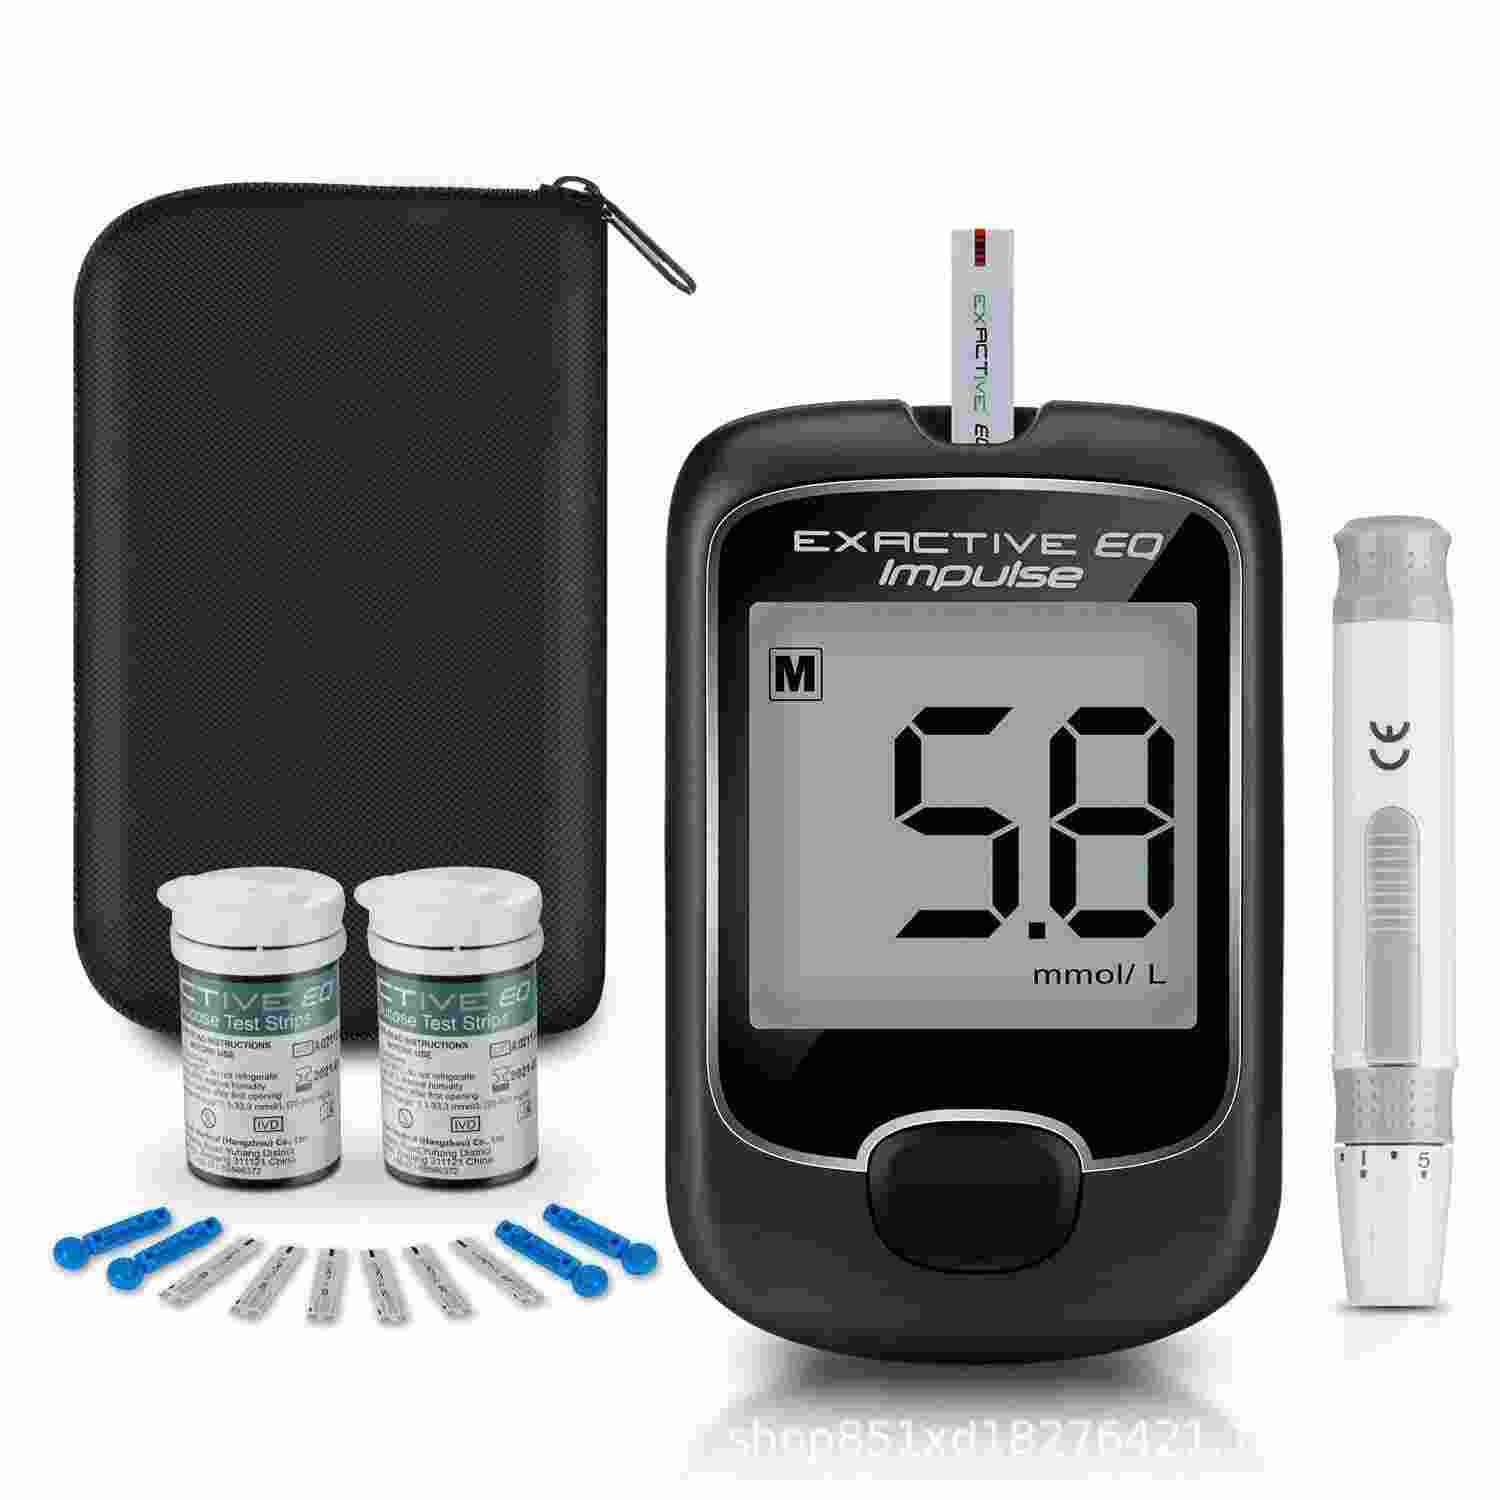 EXACTIVE EQ IMPULSE-Blood glucose meter